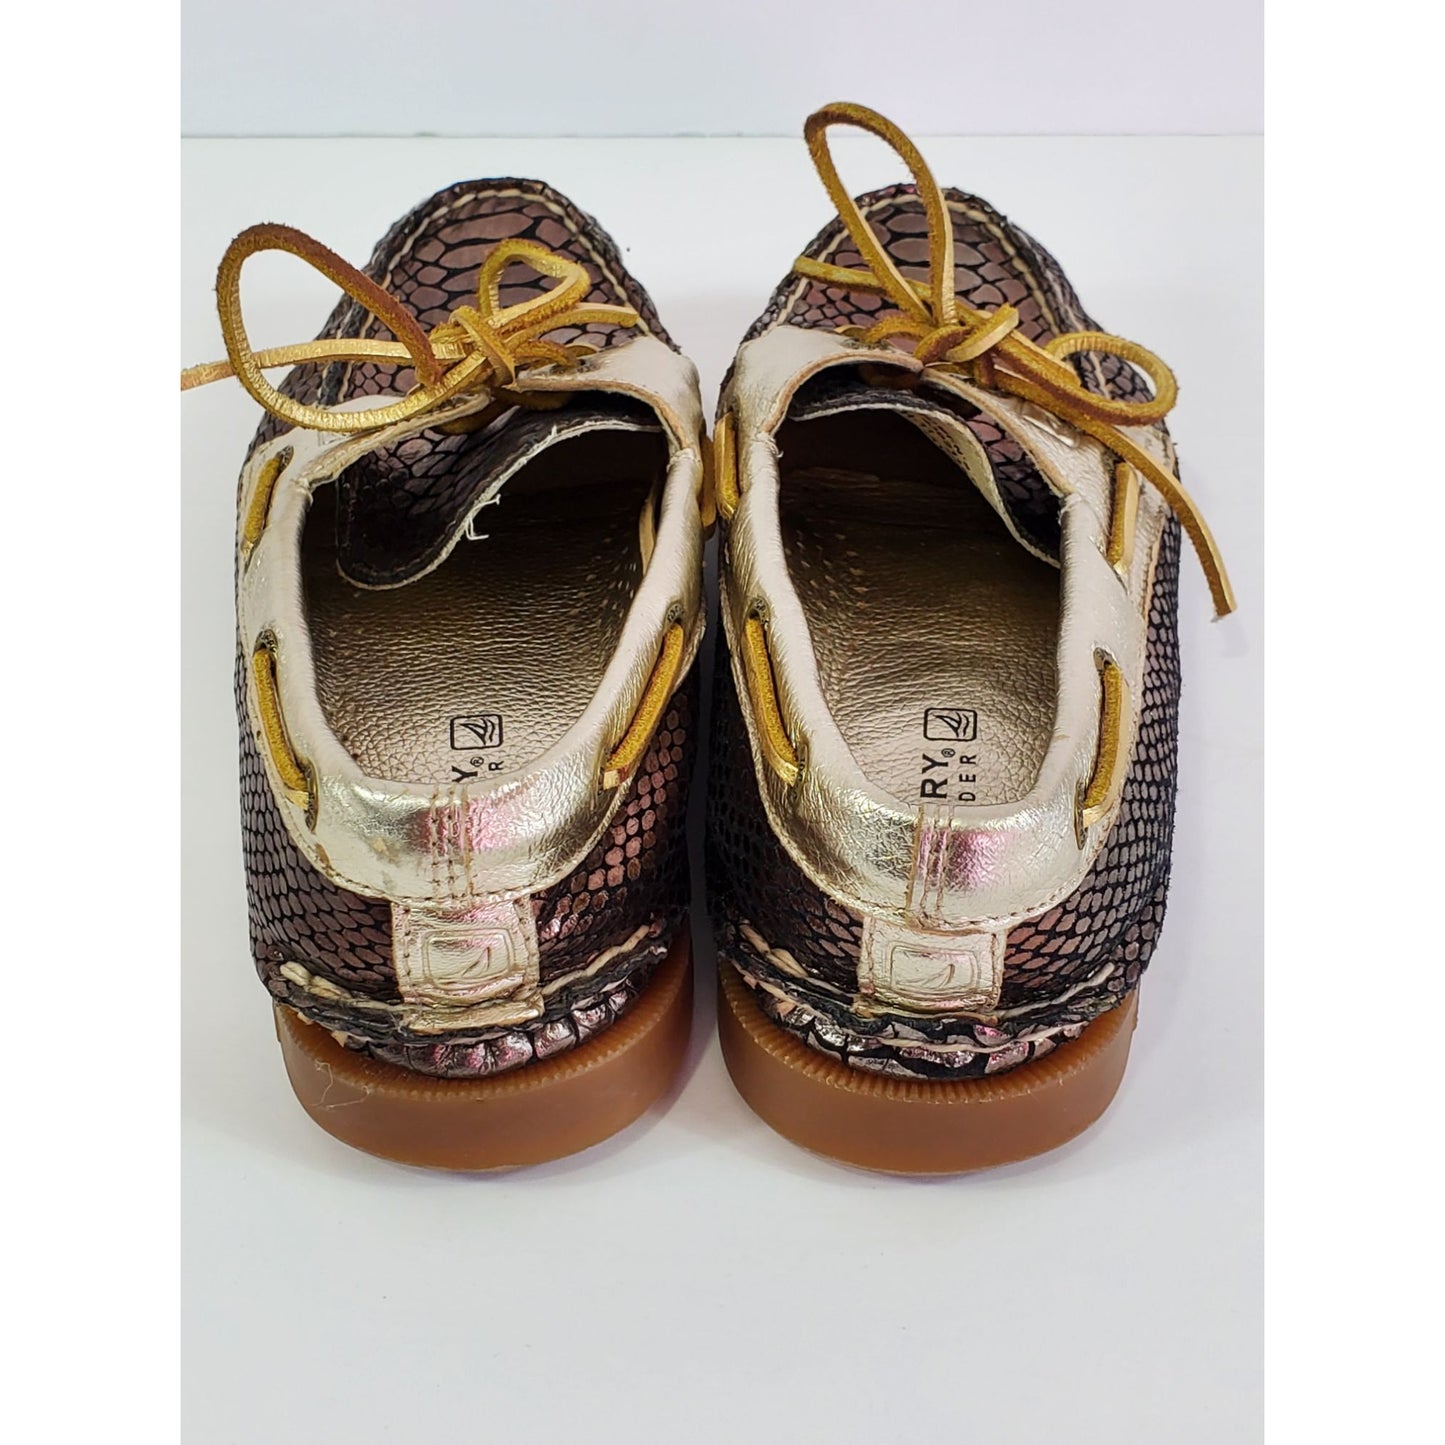 Sperry Top Slider Gold Boa Snakeskin Print Leather Boat Shoe Size 7